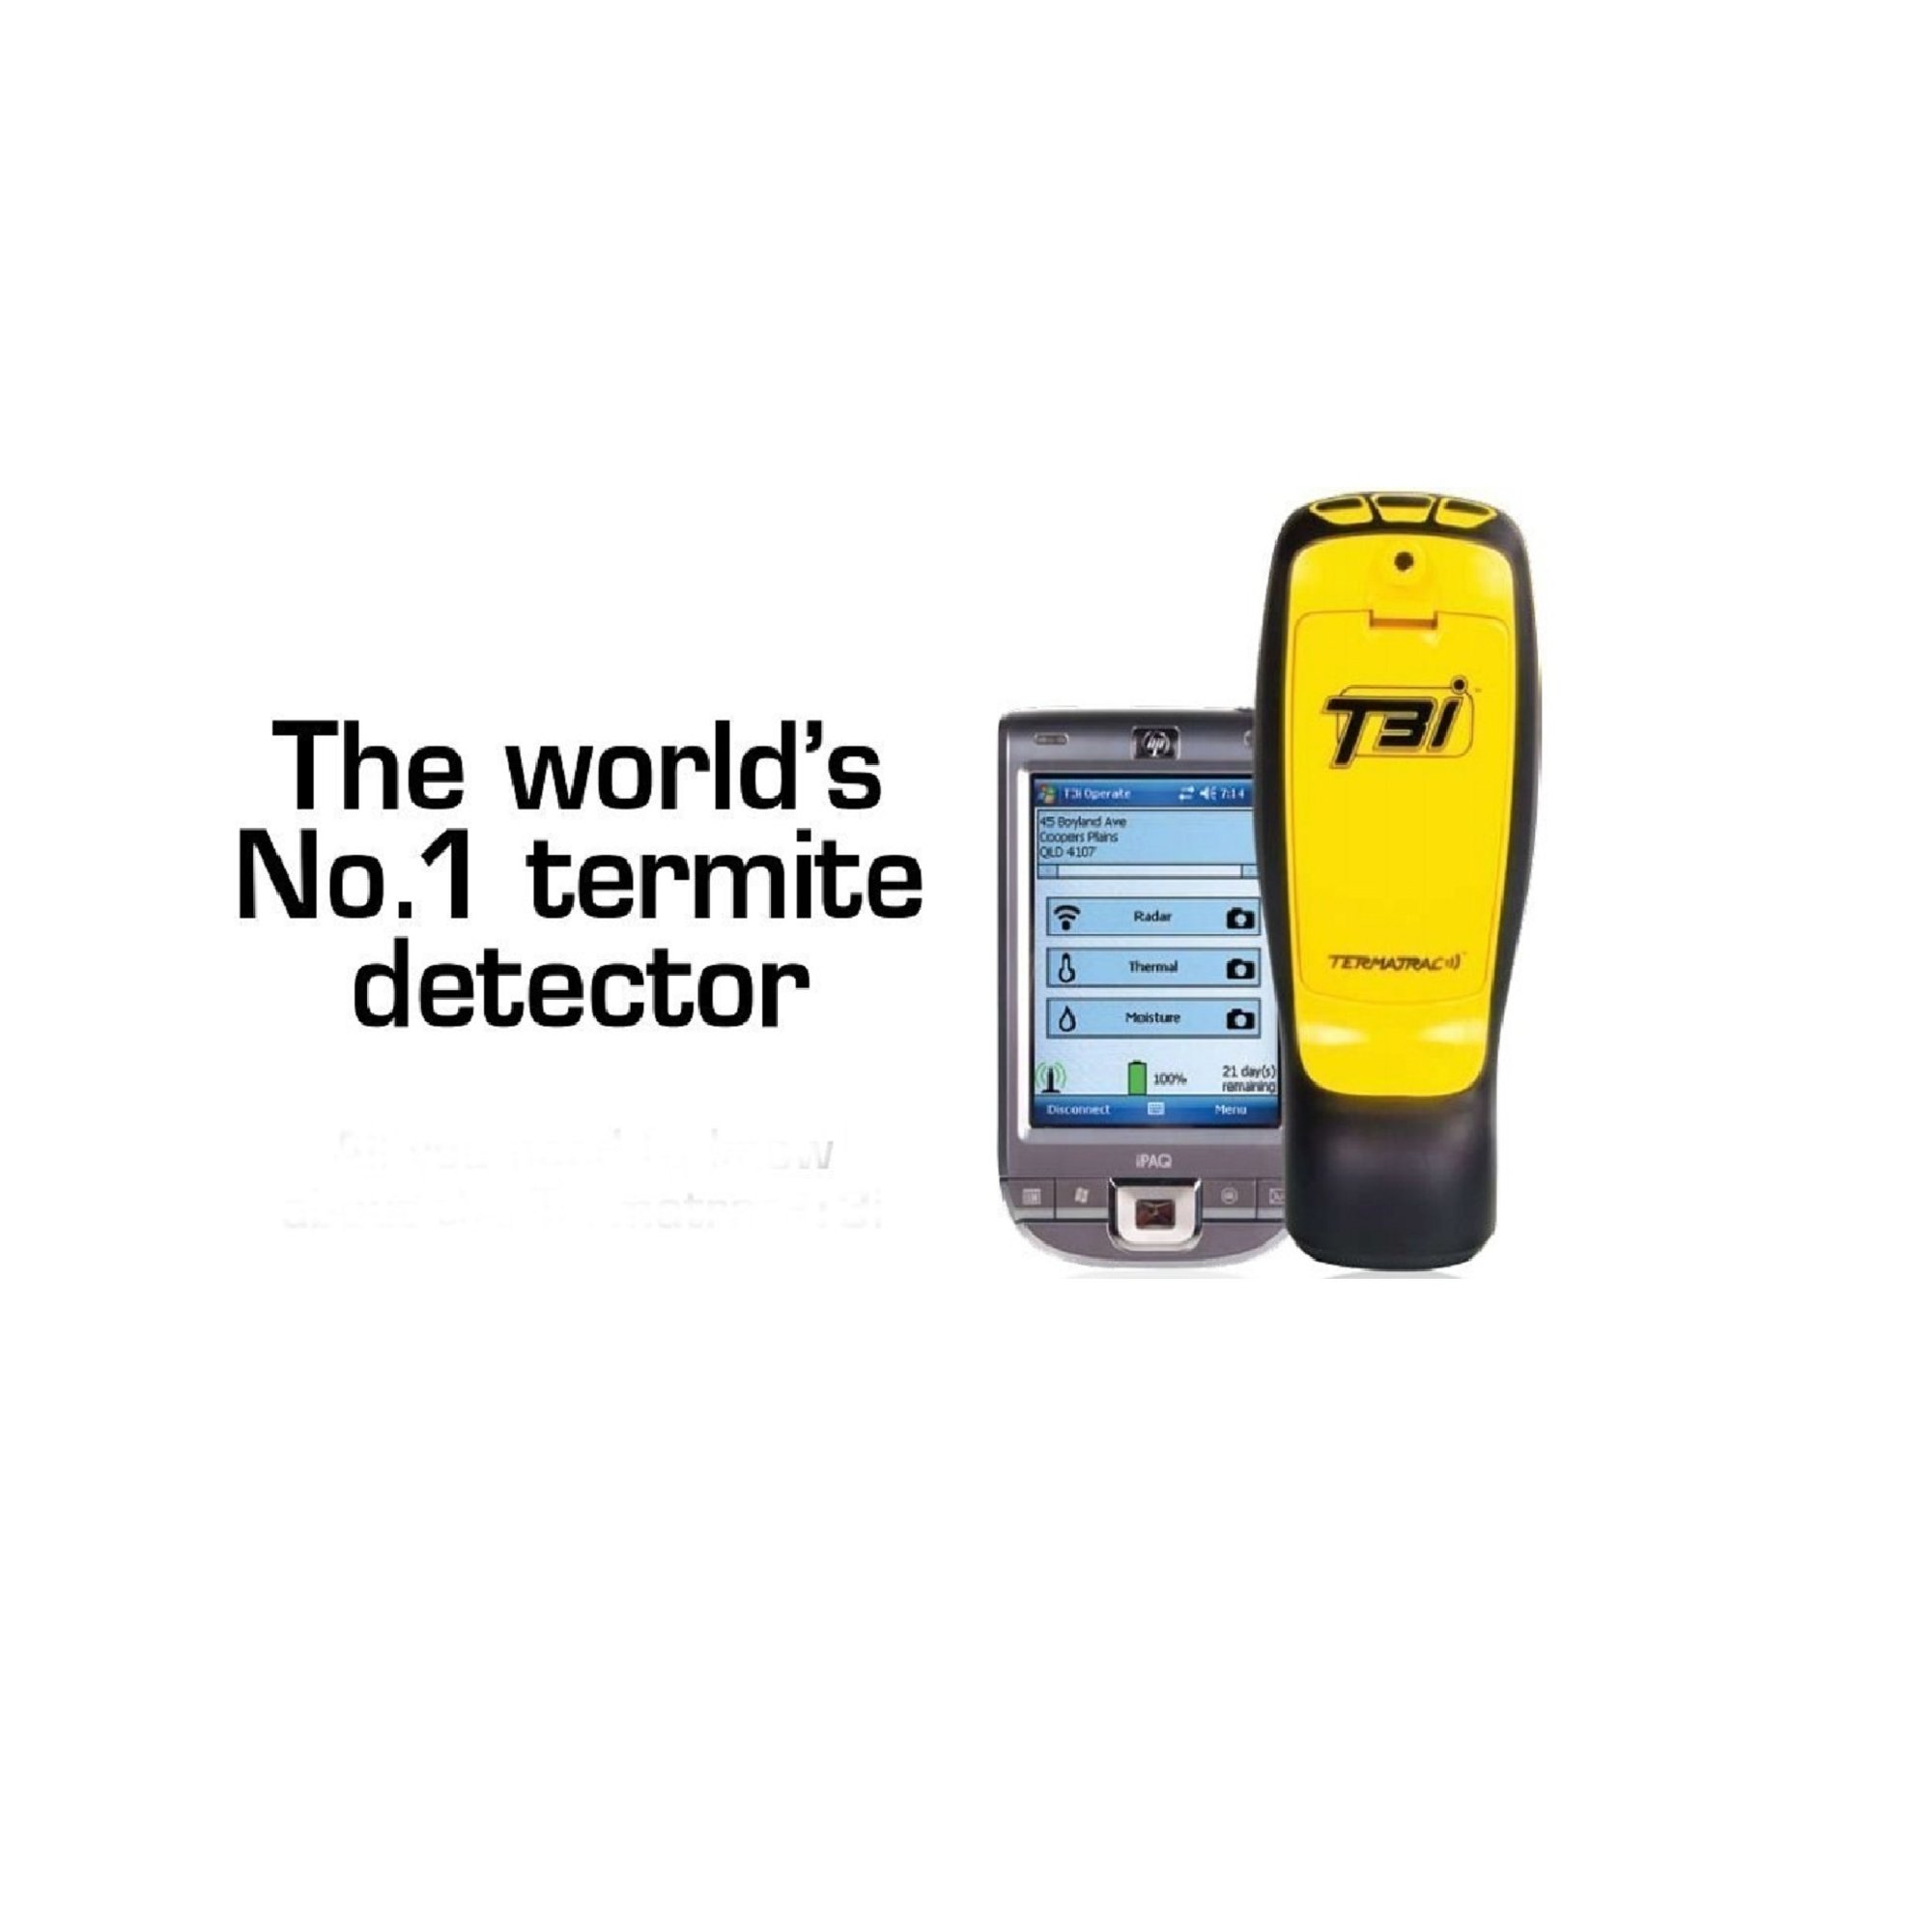 Termatrac T3i Termite Detector